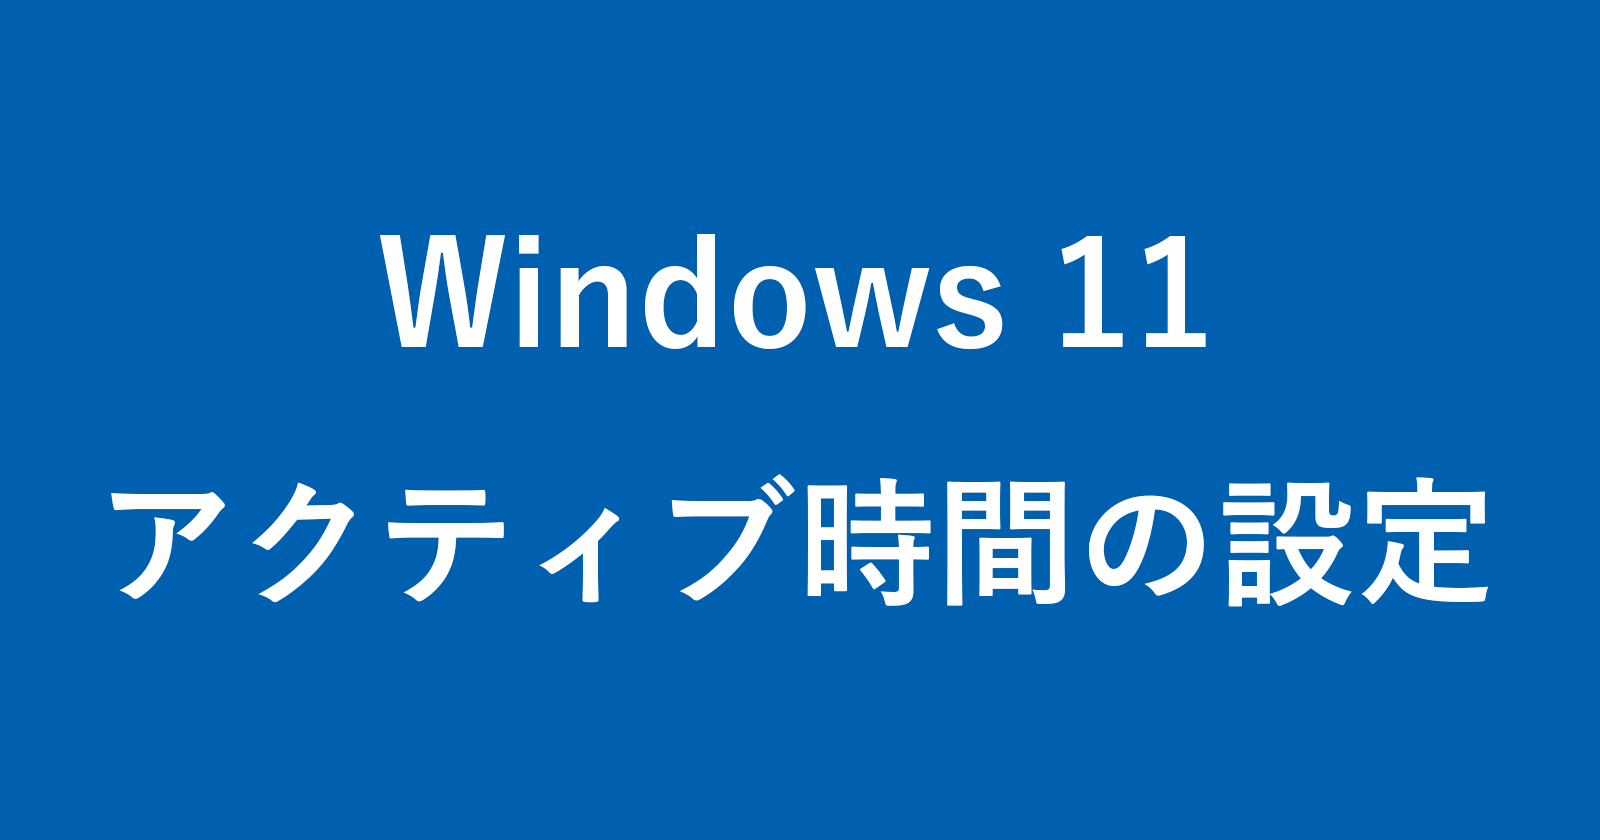 windows 11 active hours